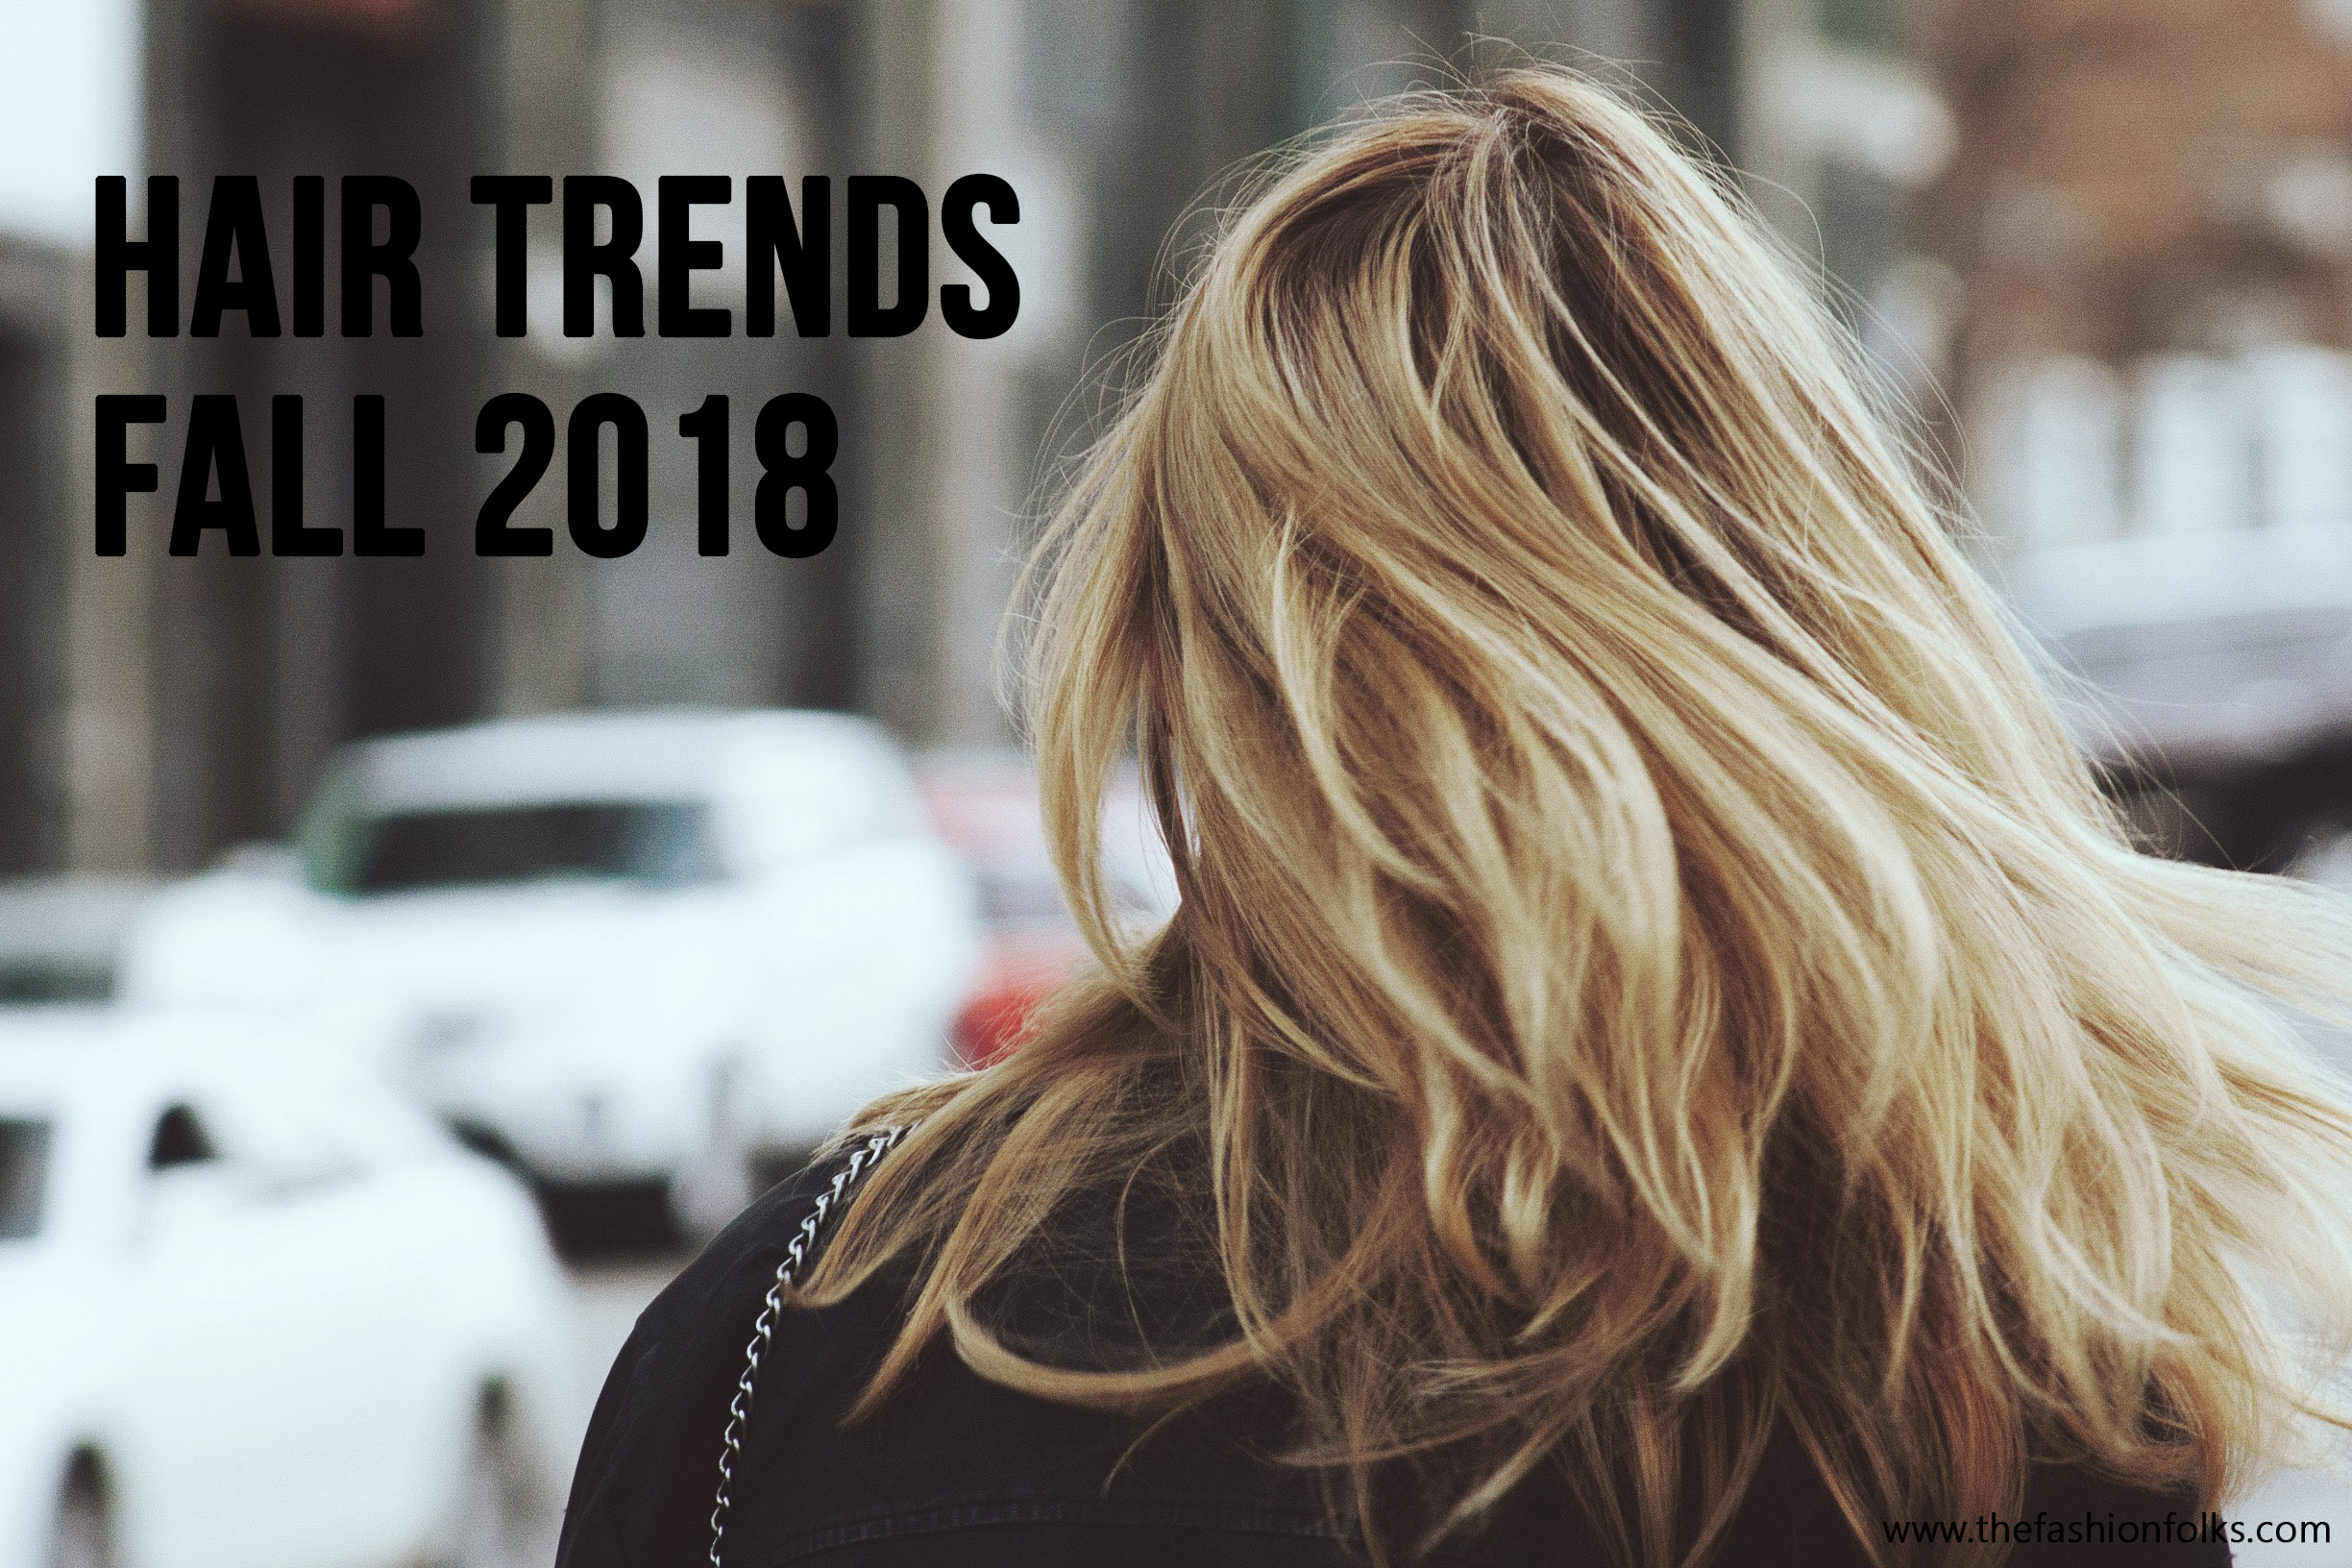 Hair Trends Fall 2018